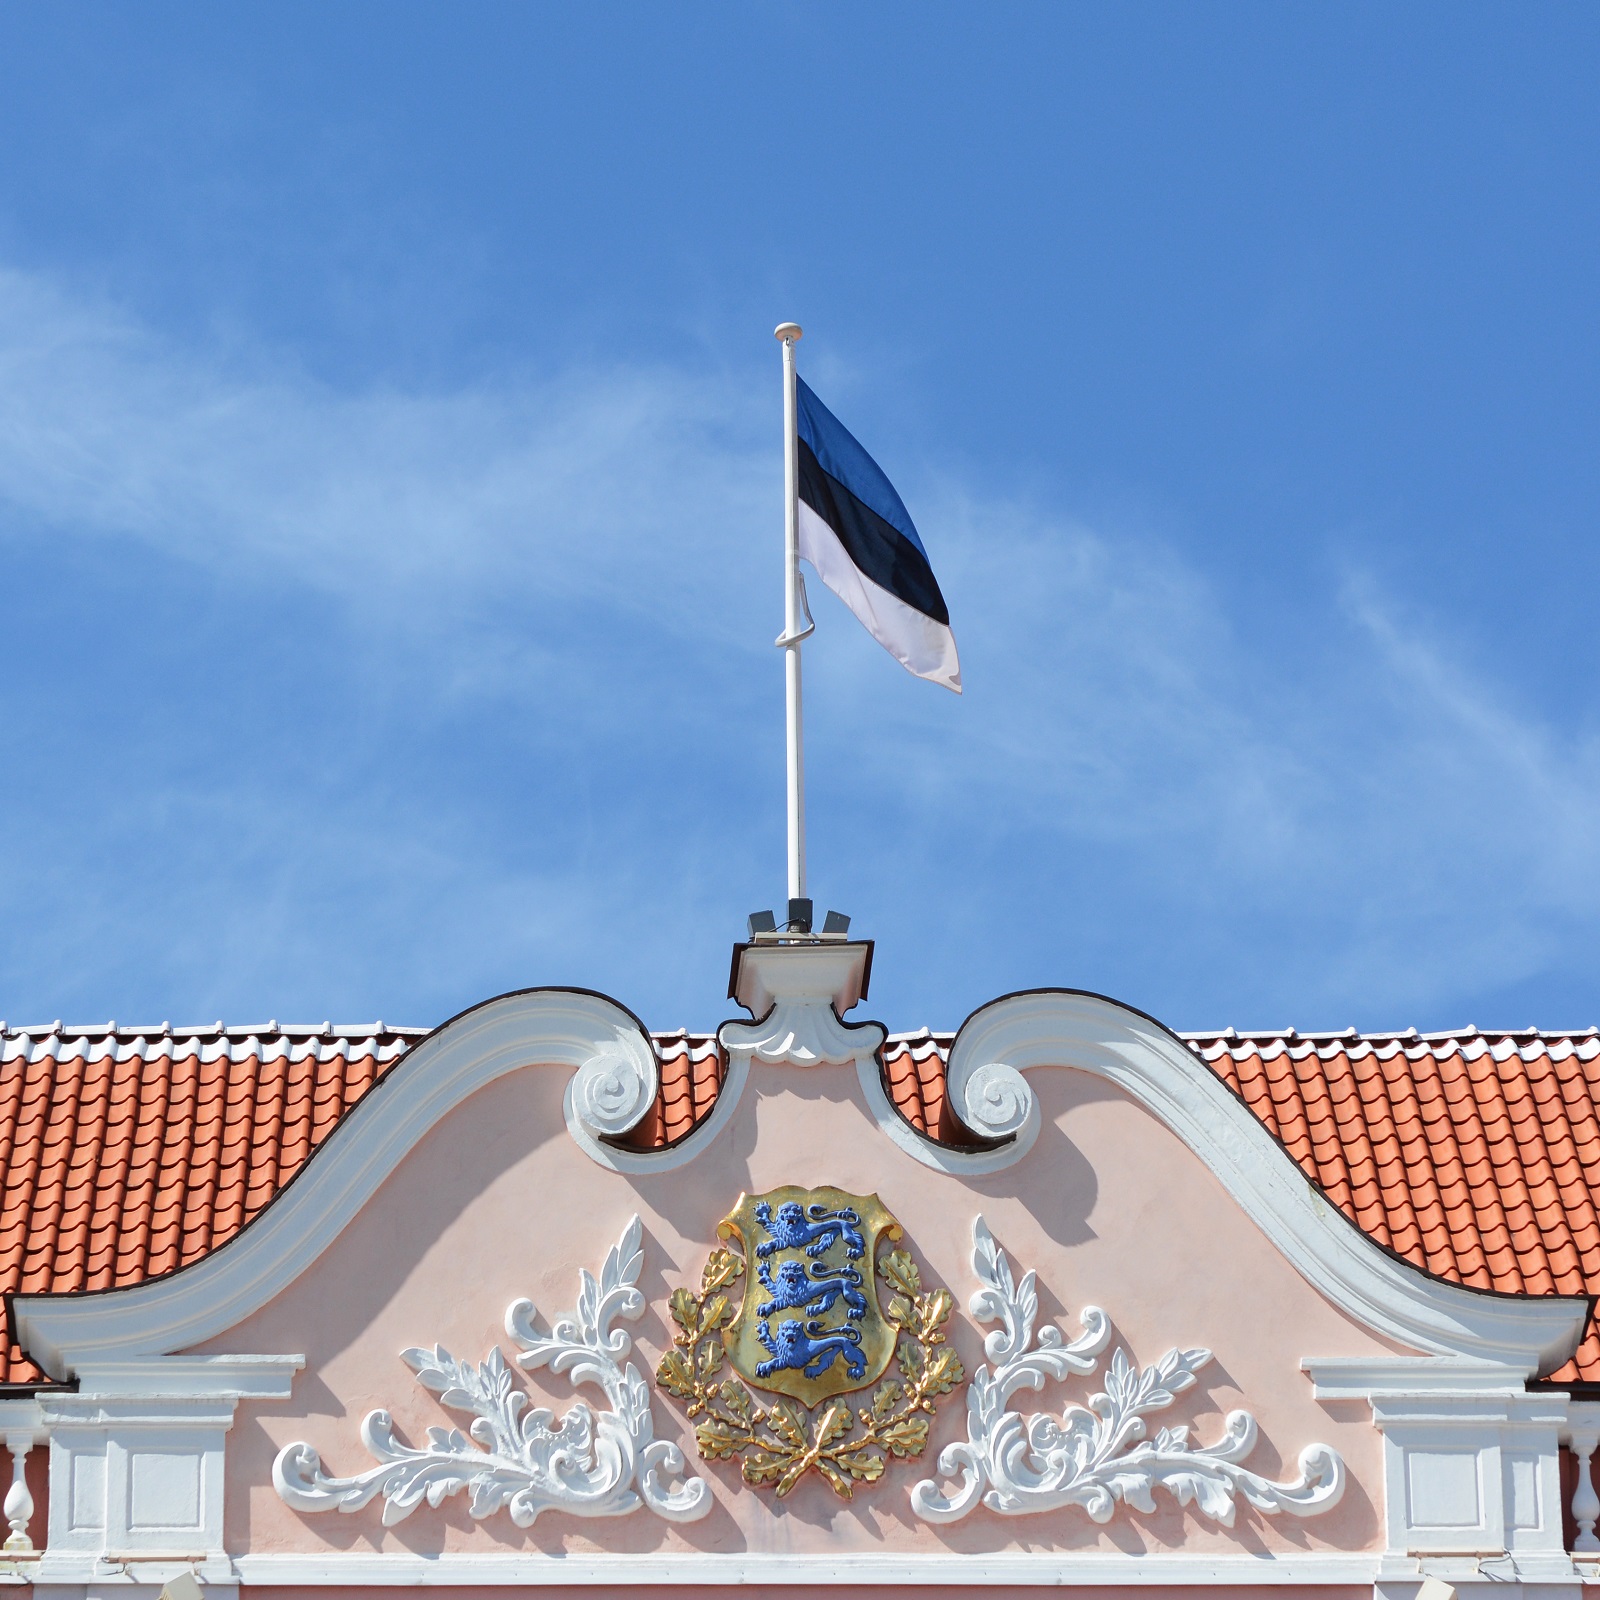 Estonia to Tighten Rules for Licensed Crypto Companies